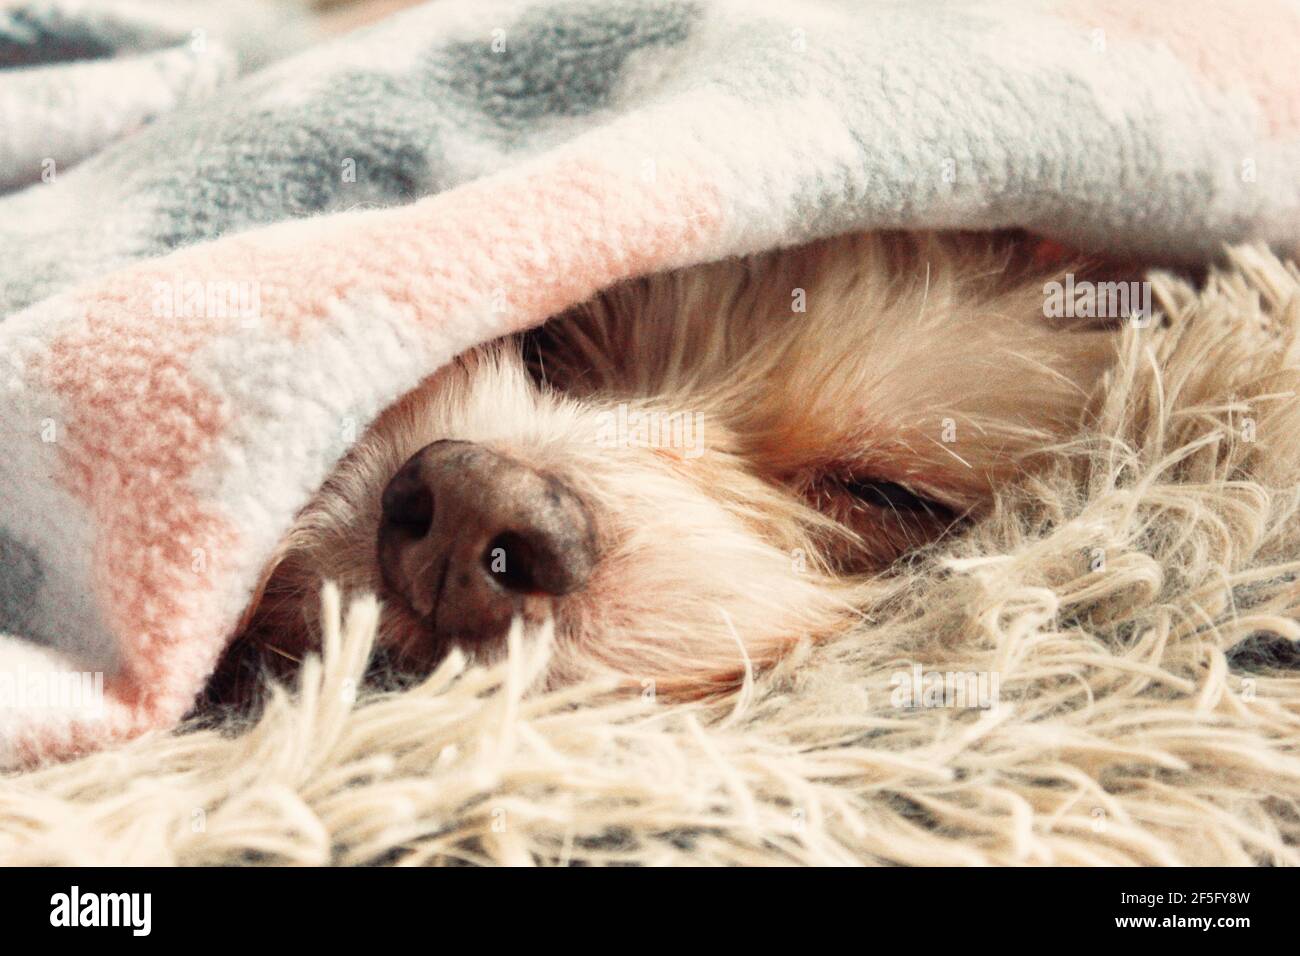 Close up of a sleeping dog Stock Photo